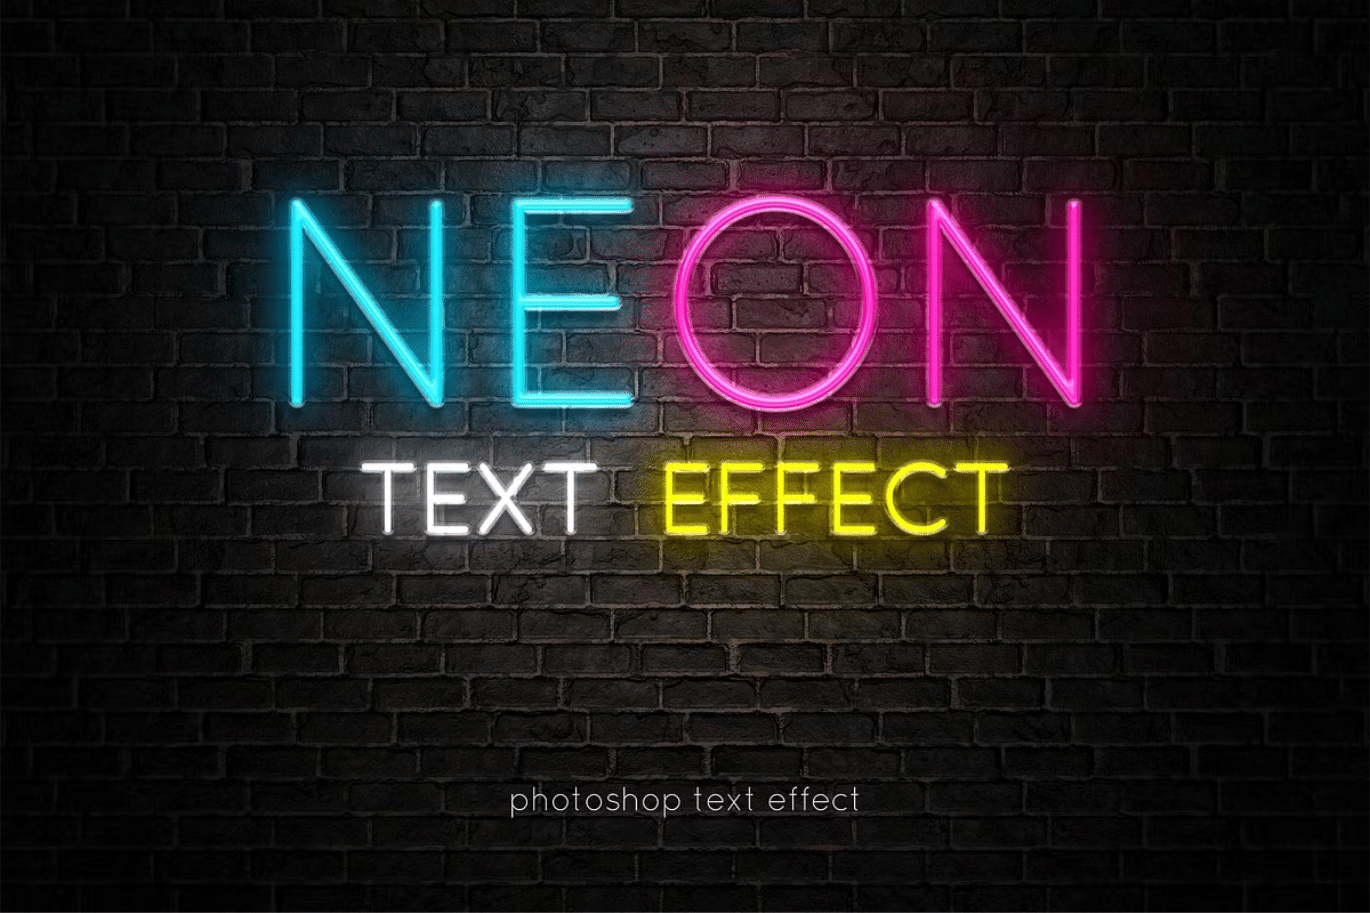 Neon Light Effect